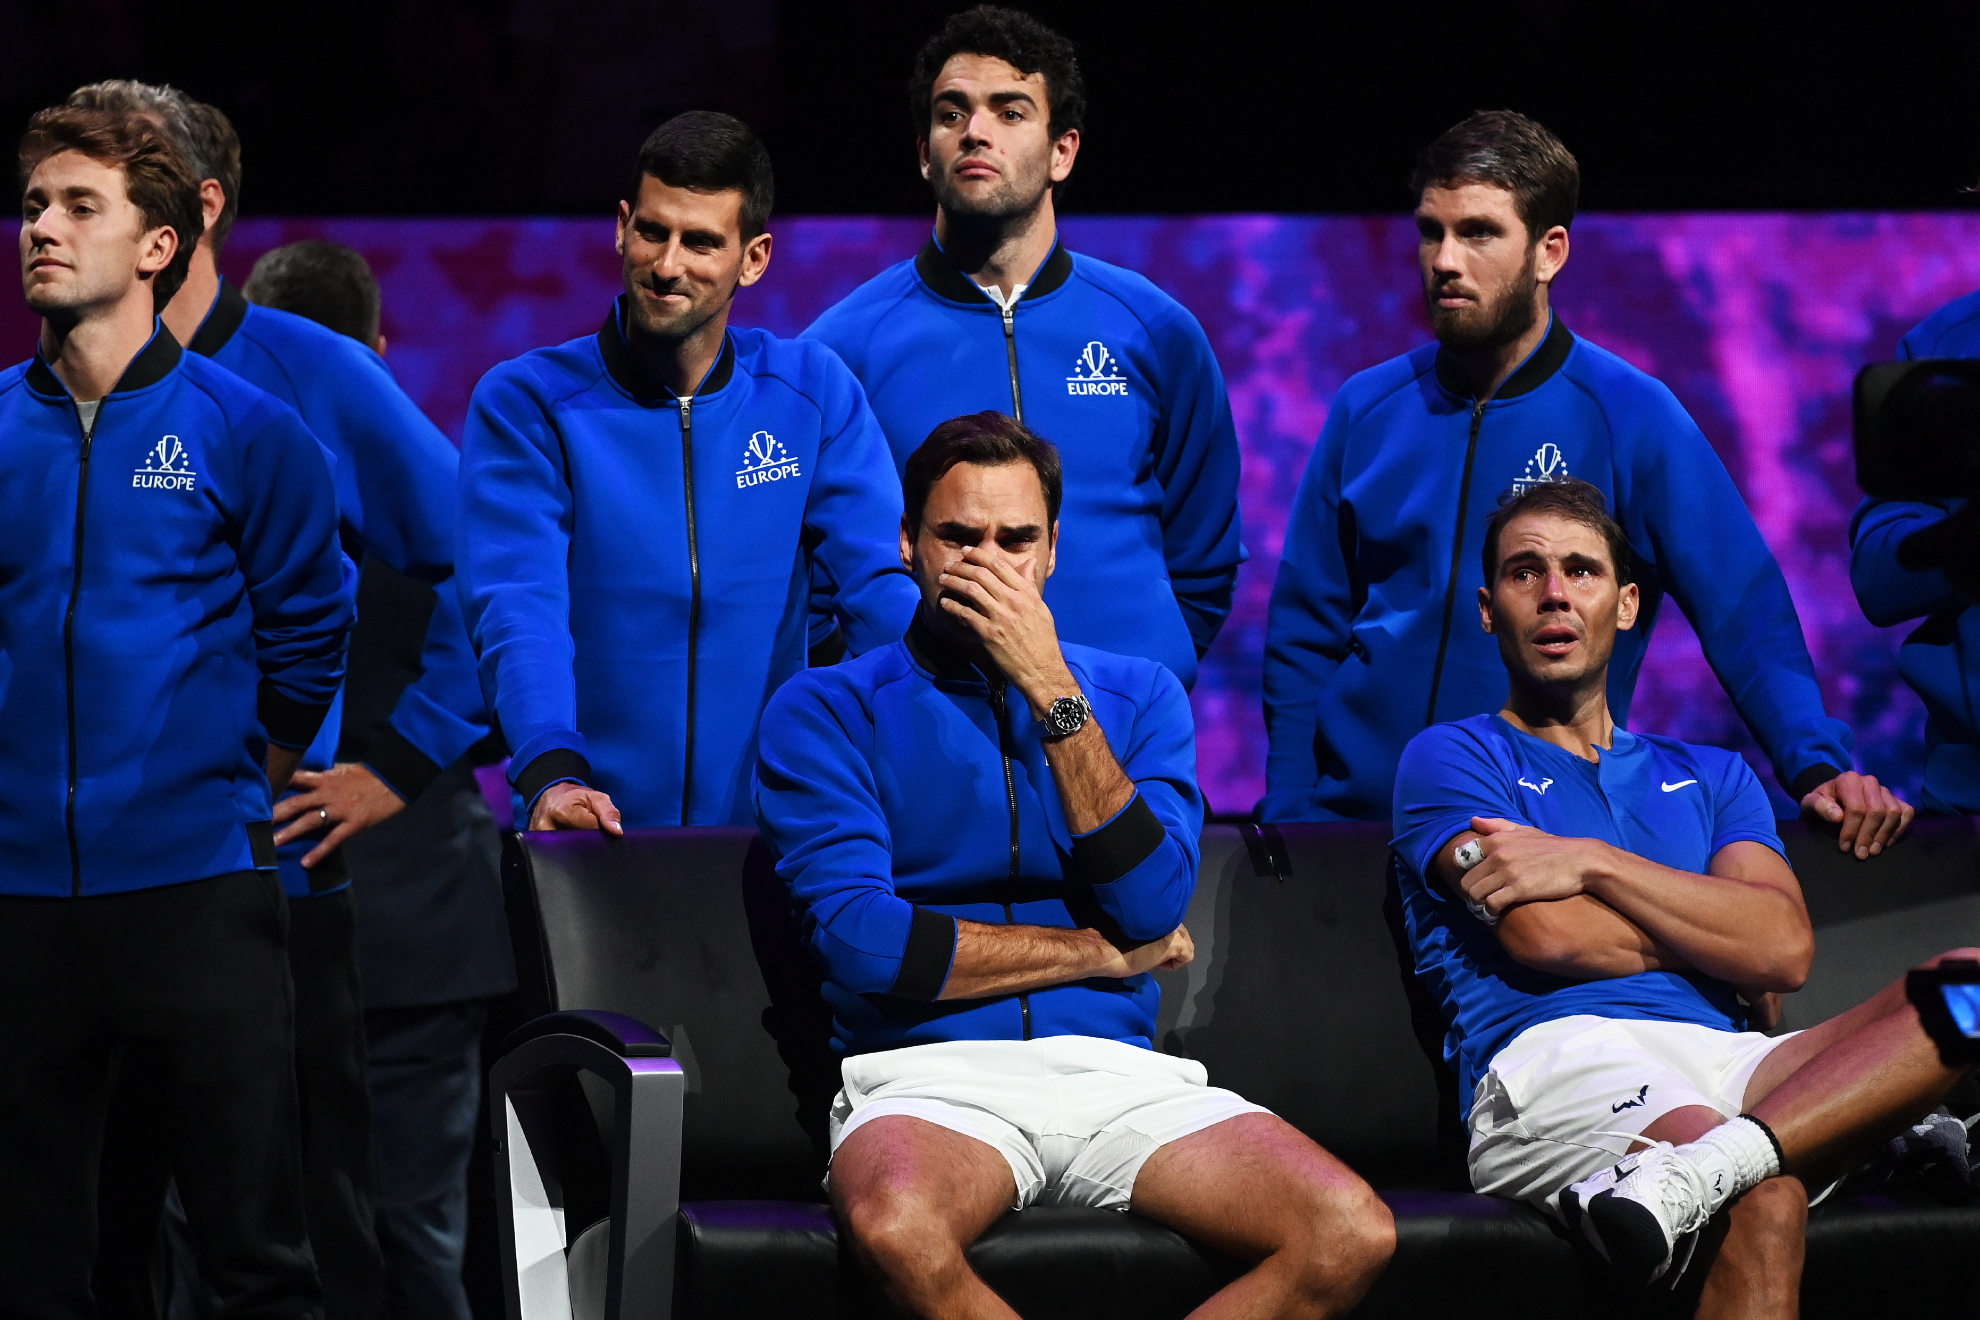 Roger Federers tearful farewell speech / EFE